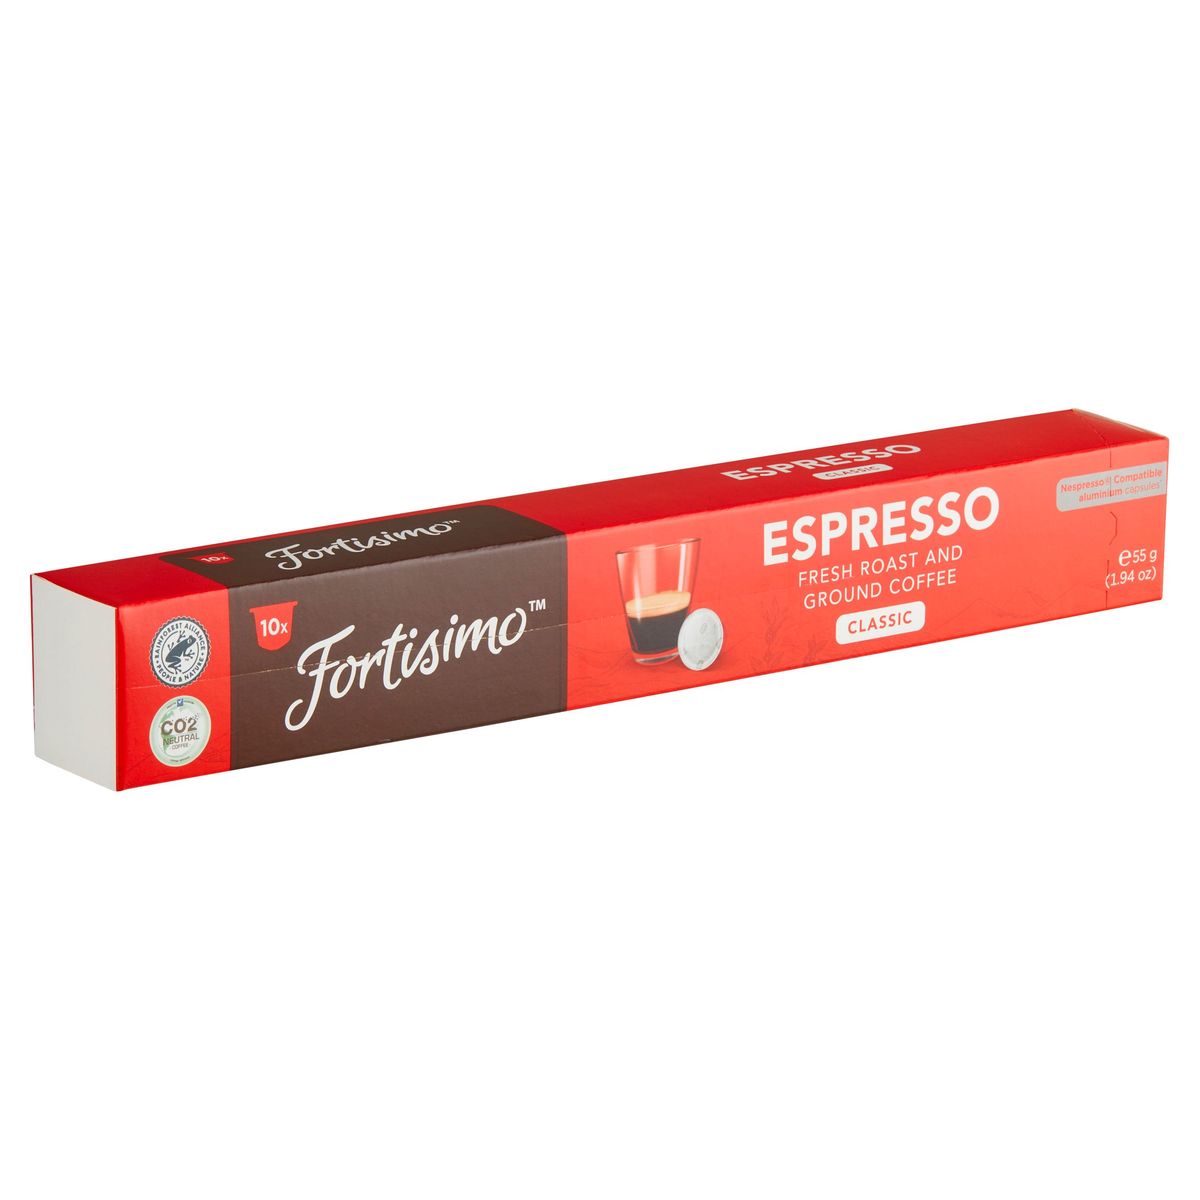 Fortisimo Espresso Fresh Roast and Ground Coffee Classic 10 x 5.5 g